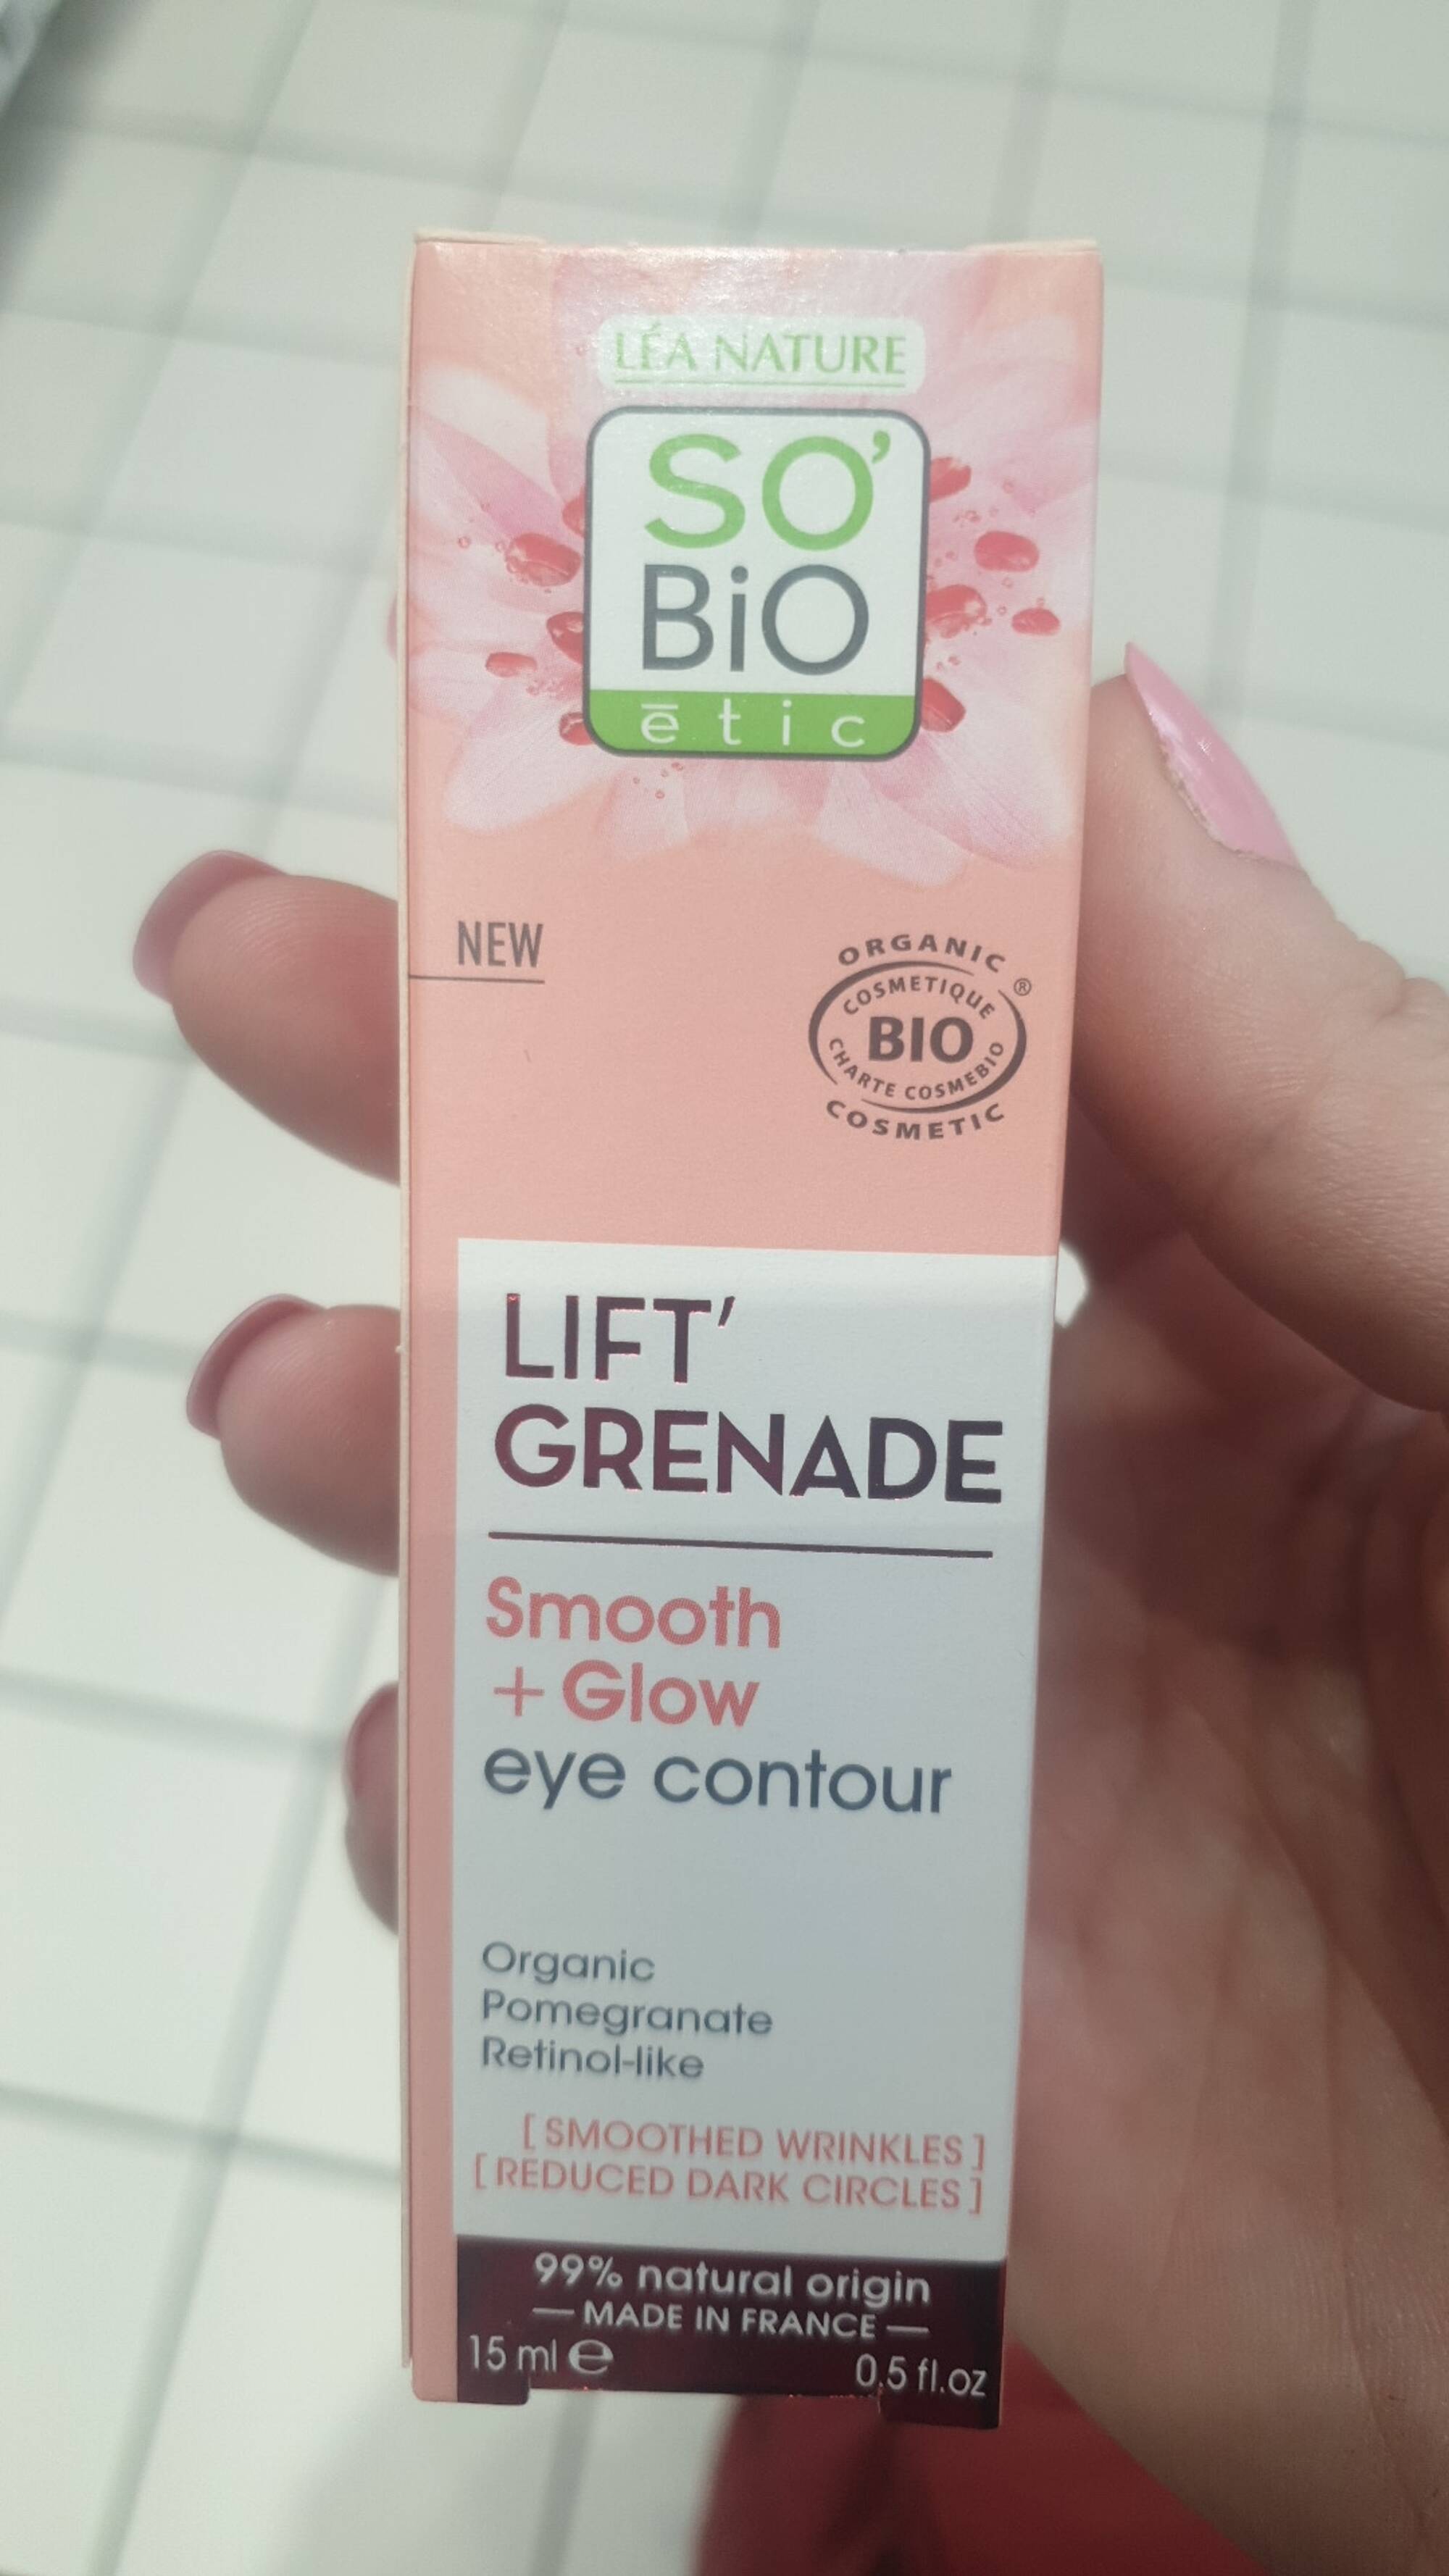 LÉA NATURE - So'bio etic Lift'grenade - Smooth + glow eye contour